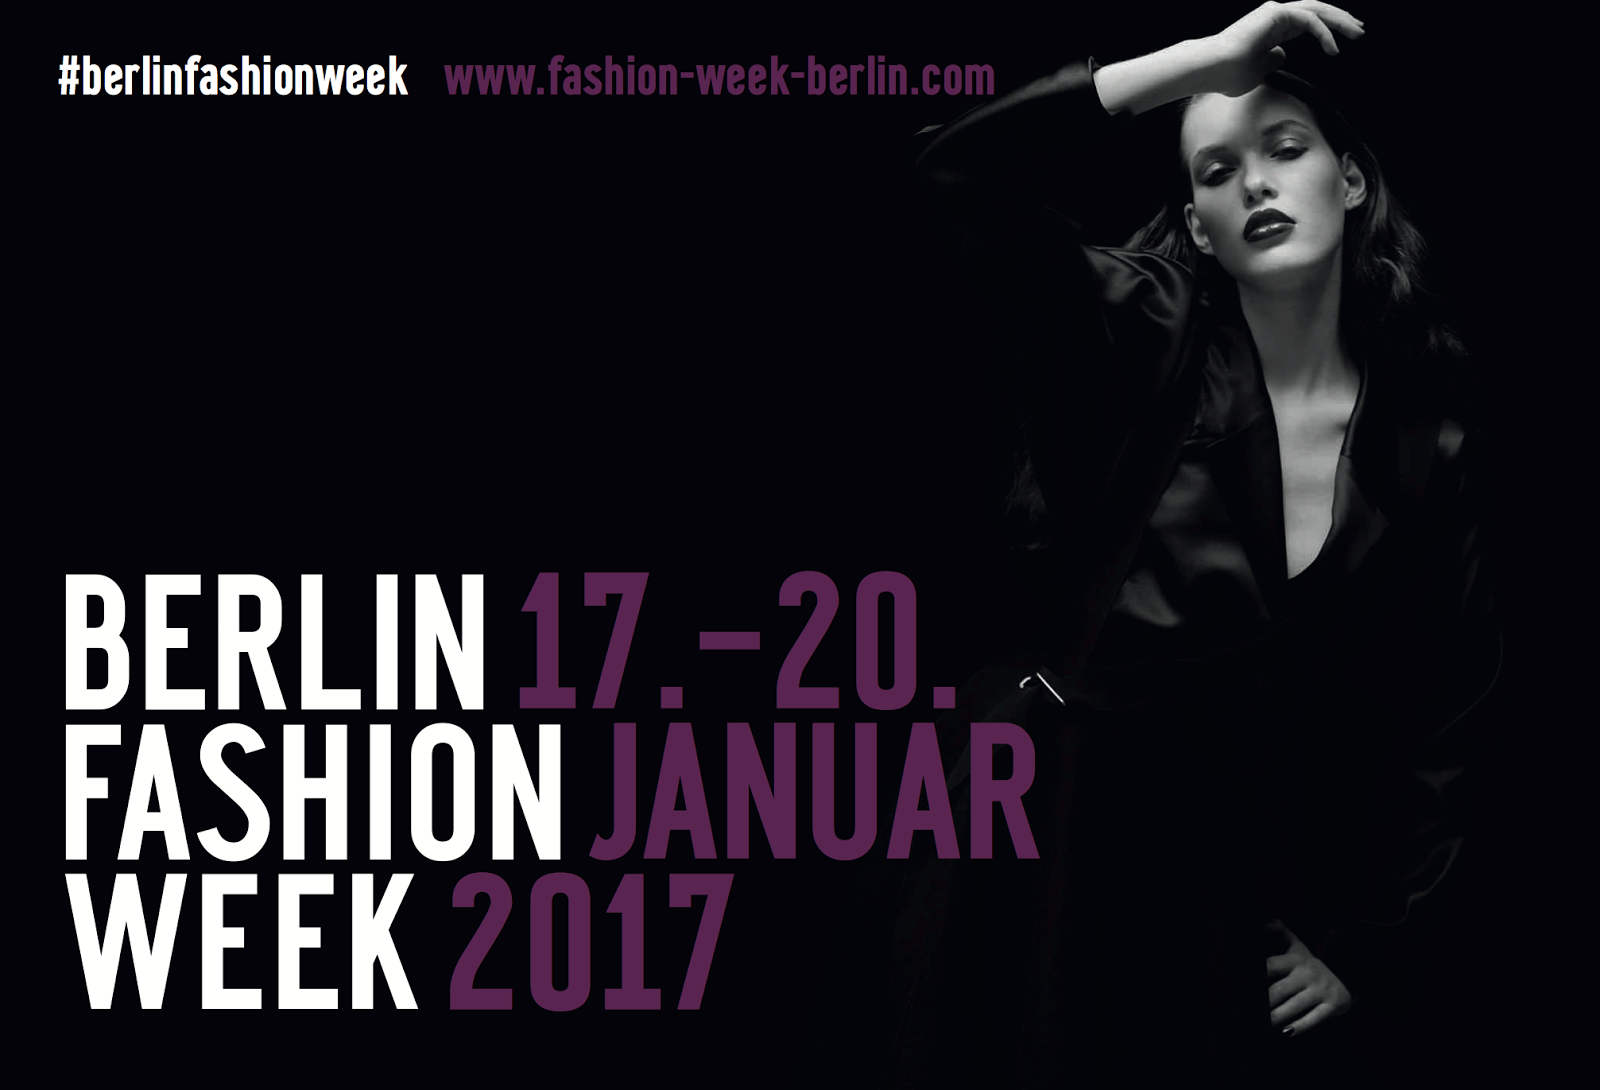 Berlin Fashion Week 2017 - Fashion & Art